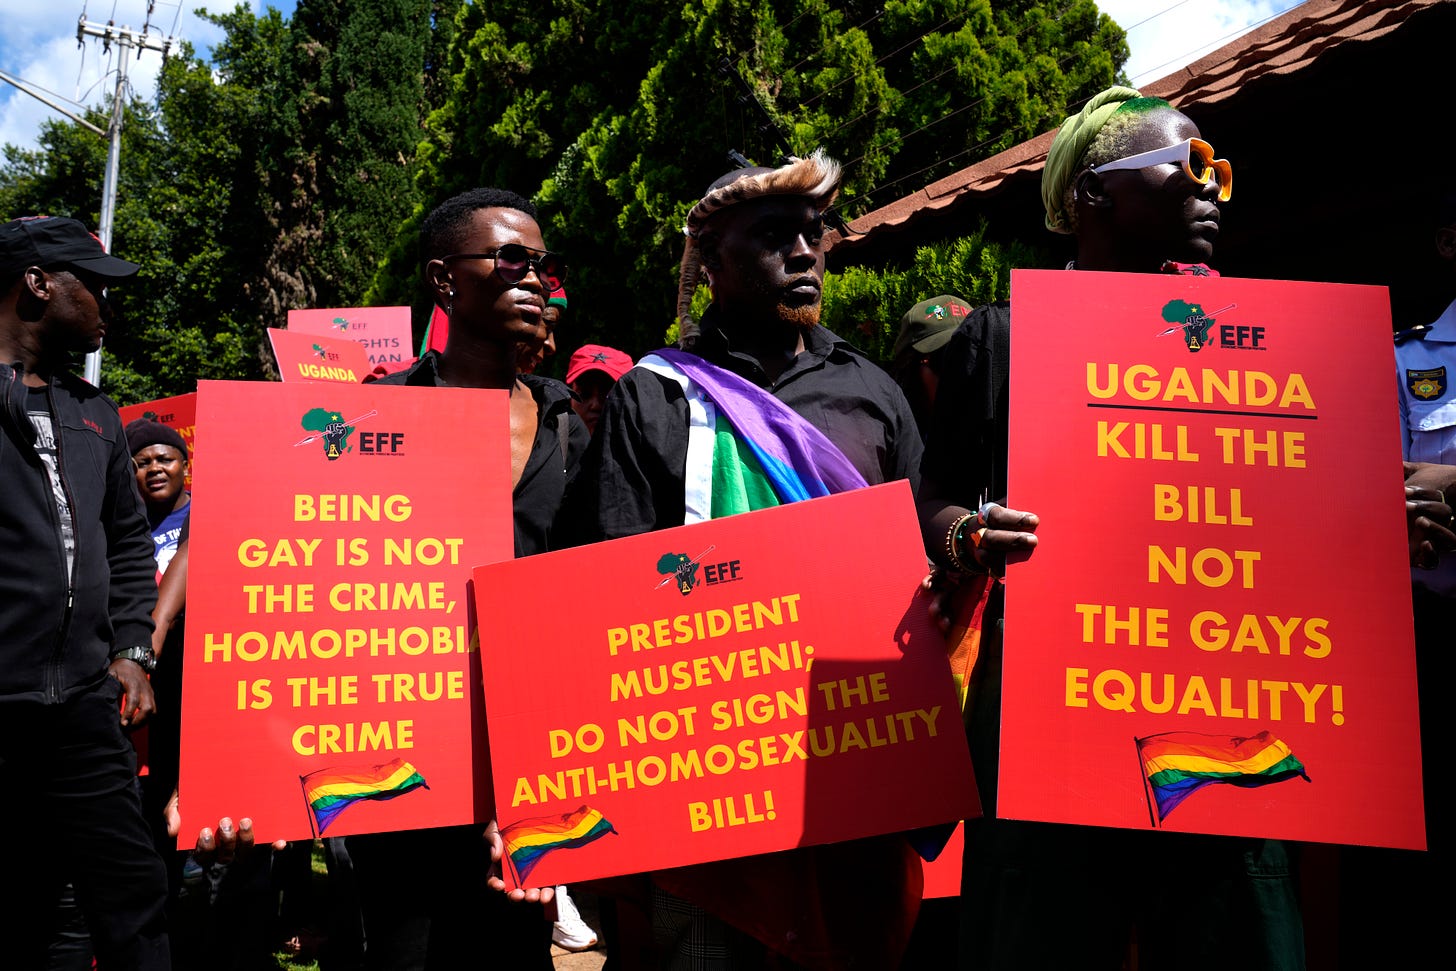 Biden calls for immediate repeal of Uganda's anti-gay law - POLITICO